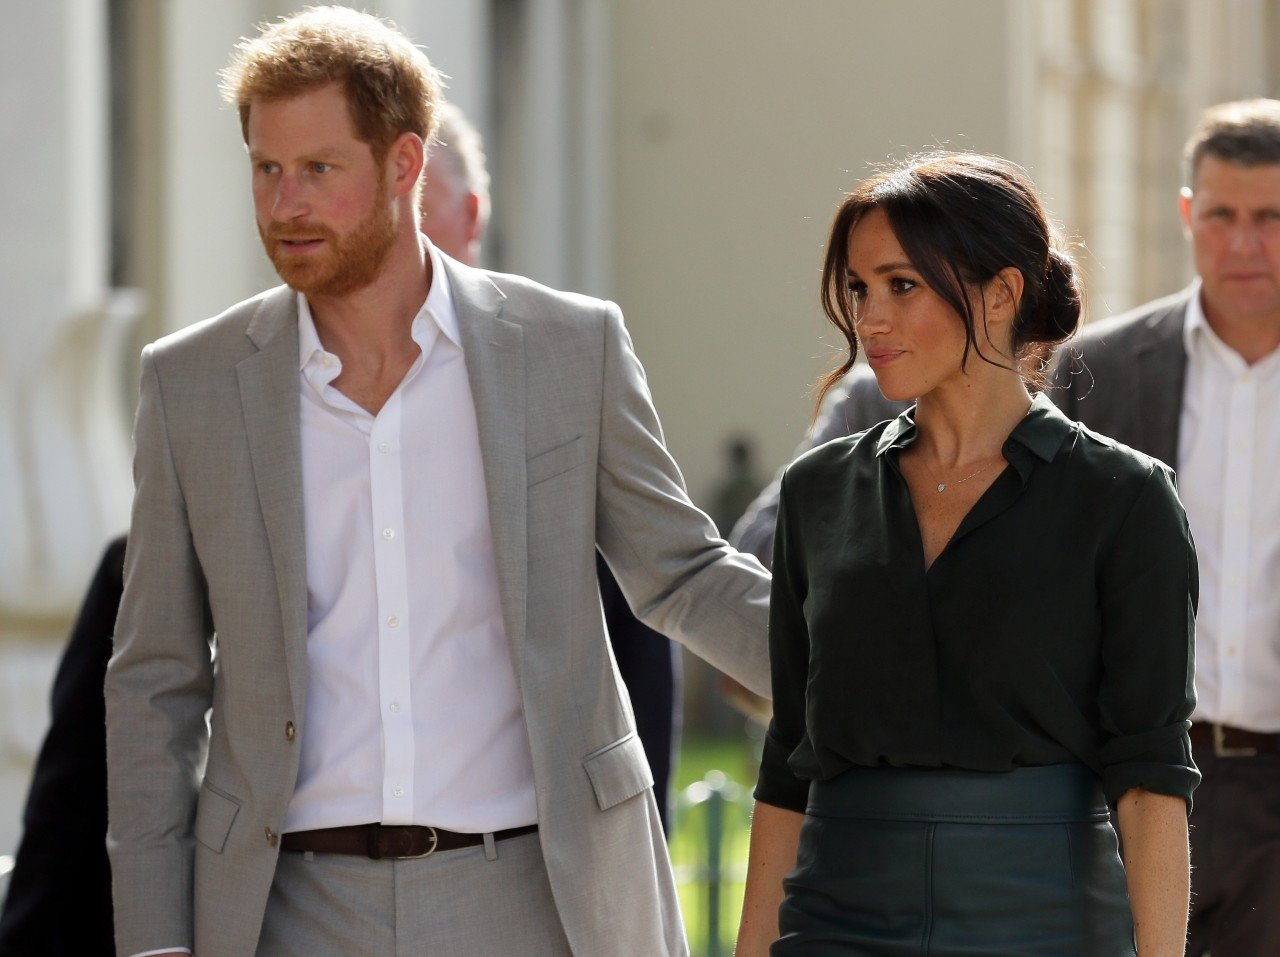 Prince Harry and Meghan Markle walk together. 